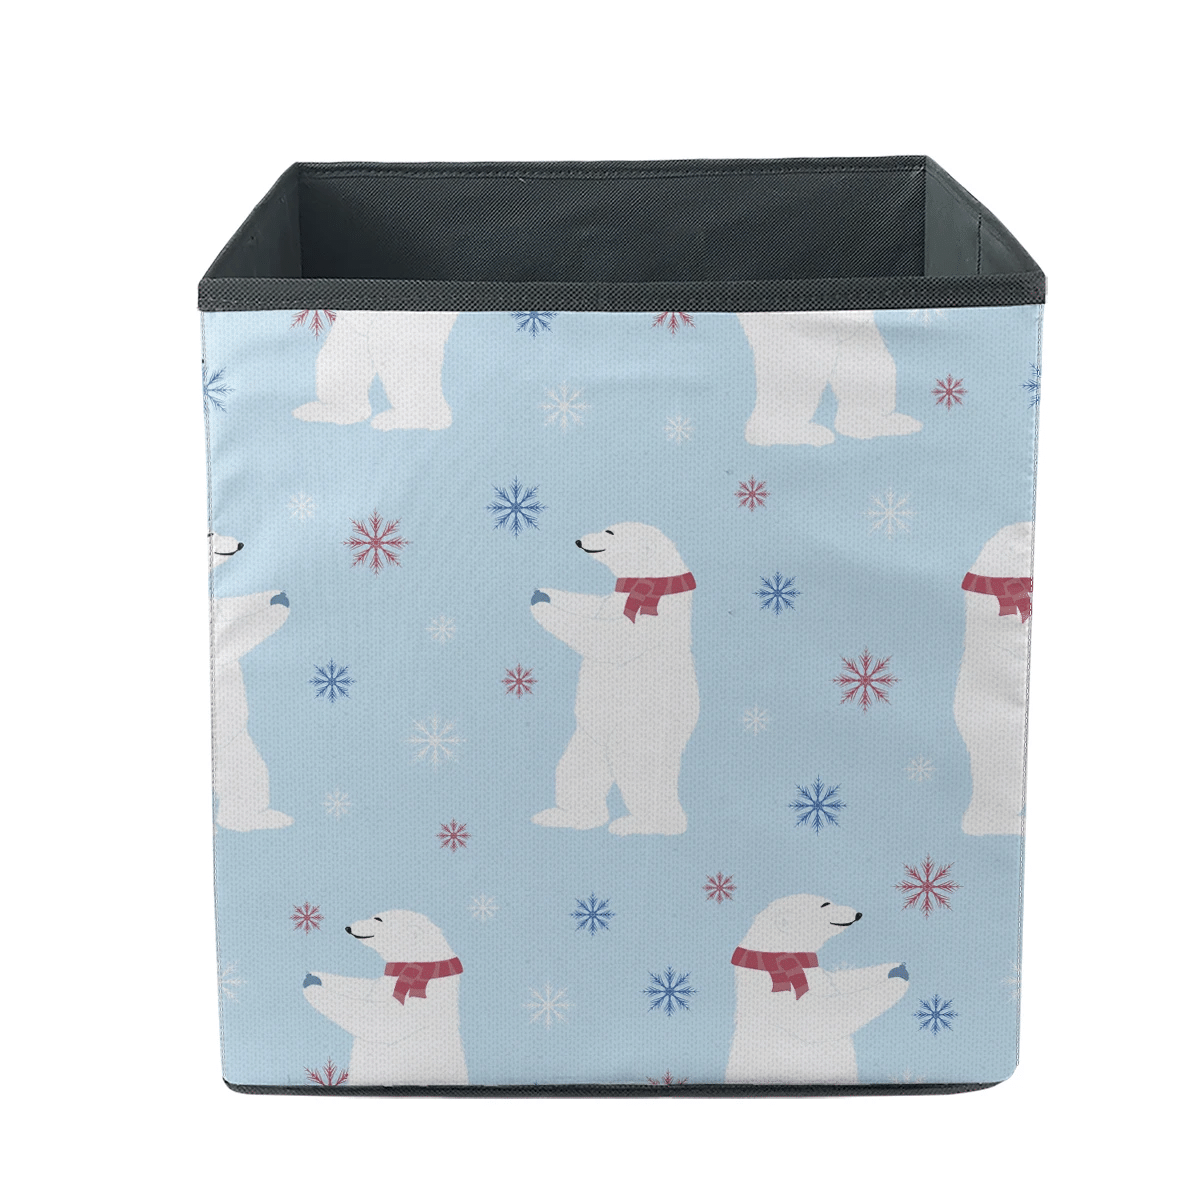 Merry Christmas With Bear Snowflakes On Blue Sky Storage Bin Storage Cube